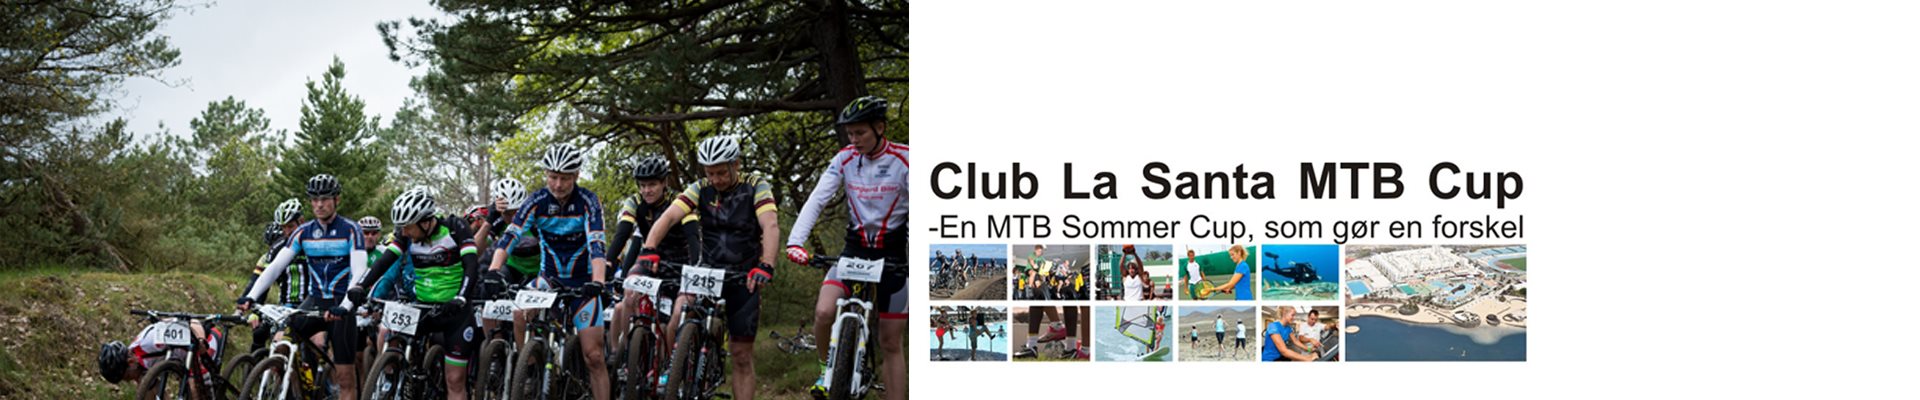 CLUB LA SANTA MTB CUP '20 - #6 Nymindegab